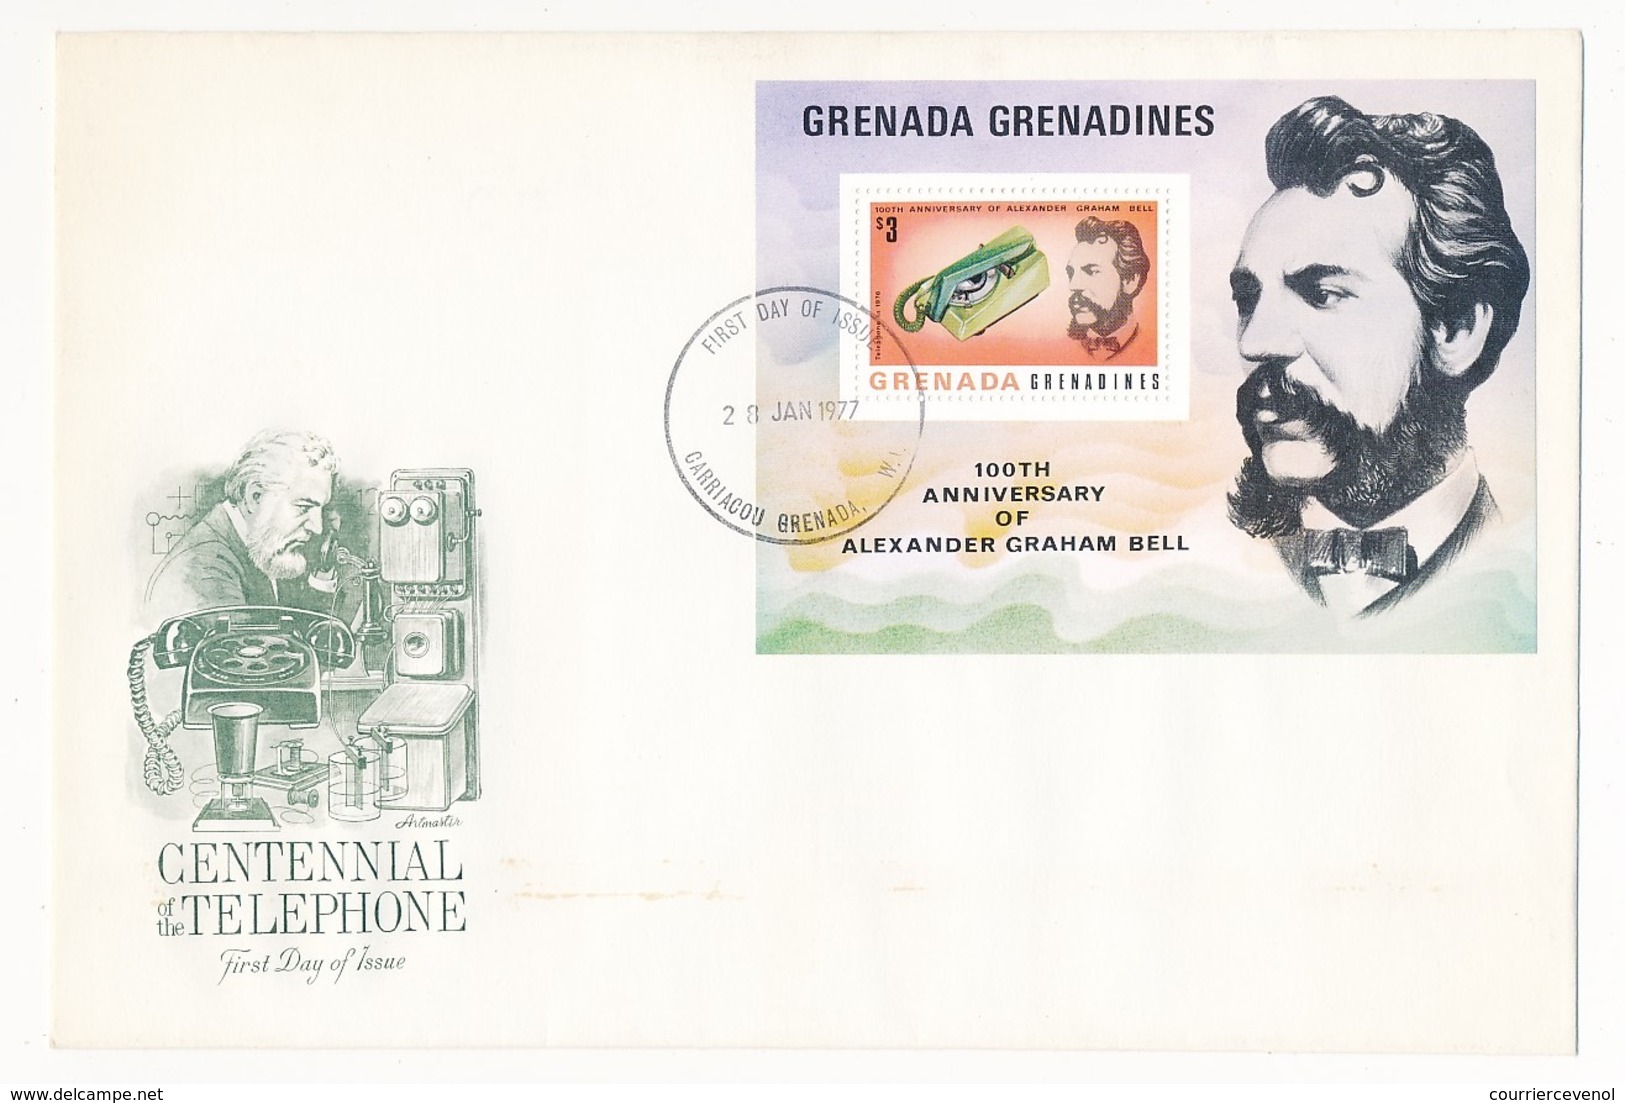 GRENADA - GRENADINES - 3 Enveloppes FDC - Centenaire Du Téléphone - Graham BELL - 1977 - Télécom